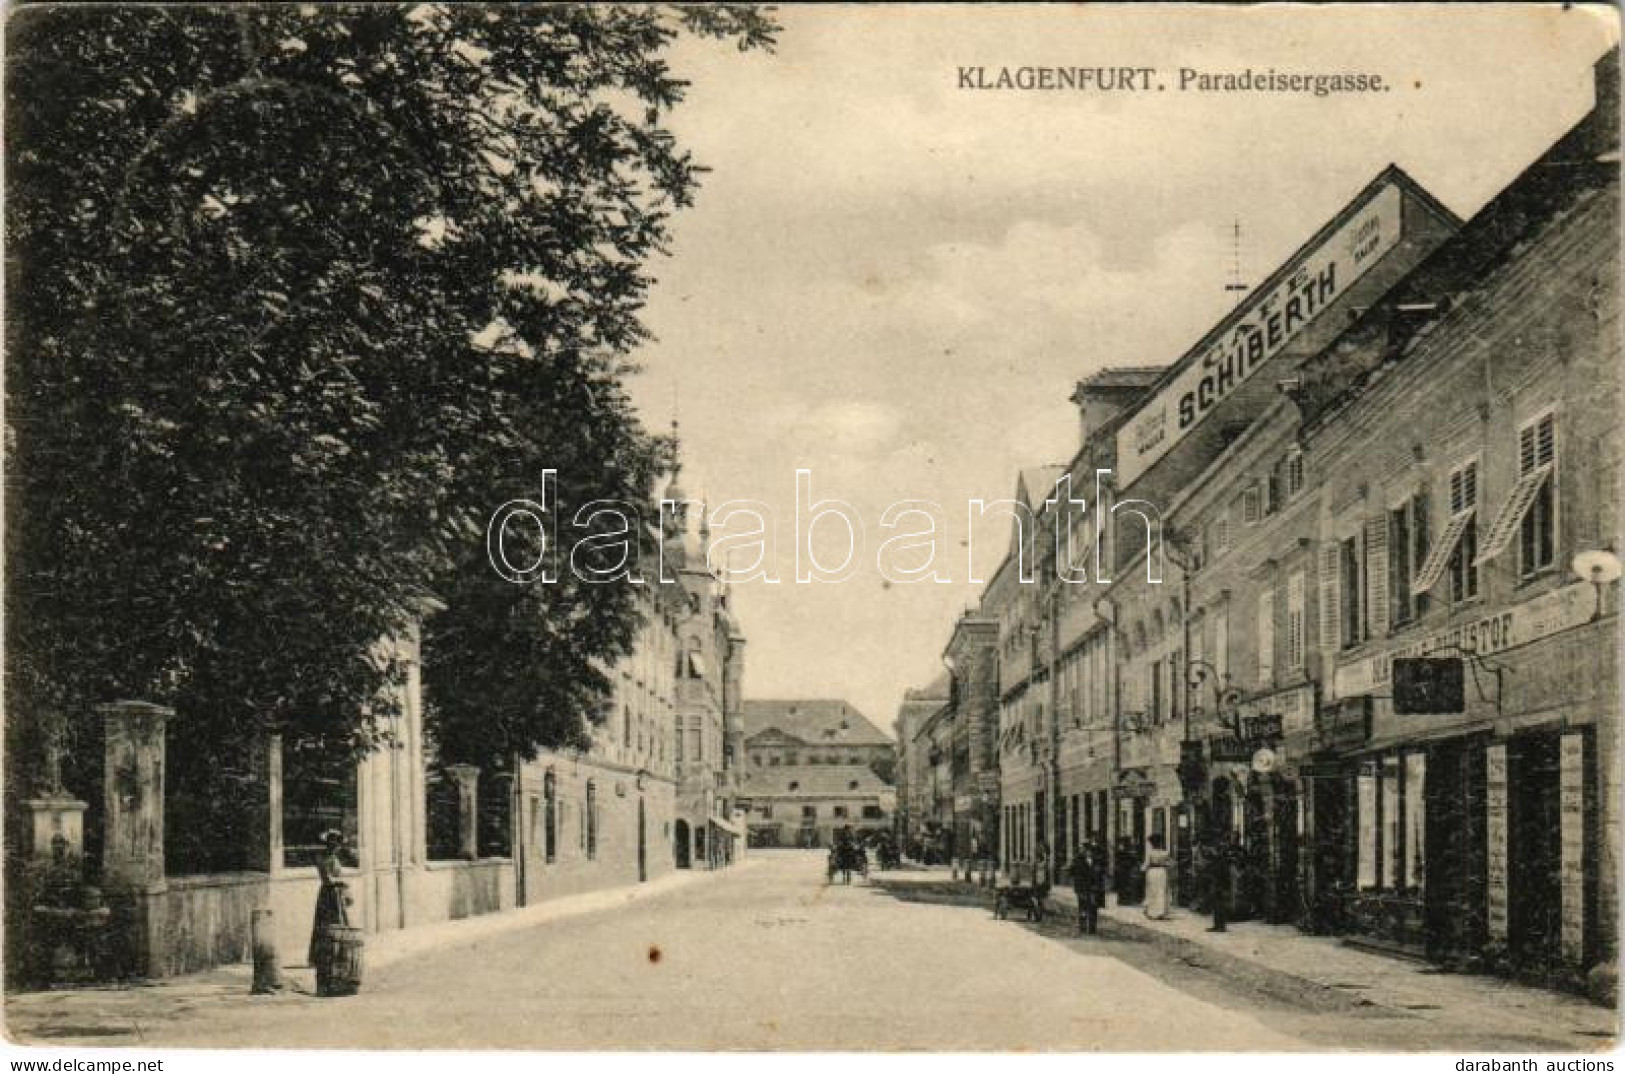 T2/T3 1907 Klagenfurt, Paradeisergasse, Cafe Schiberth, Mathias Christof / Street, Cafe, Shop (EK) - Unclassified